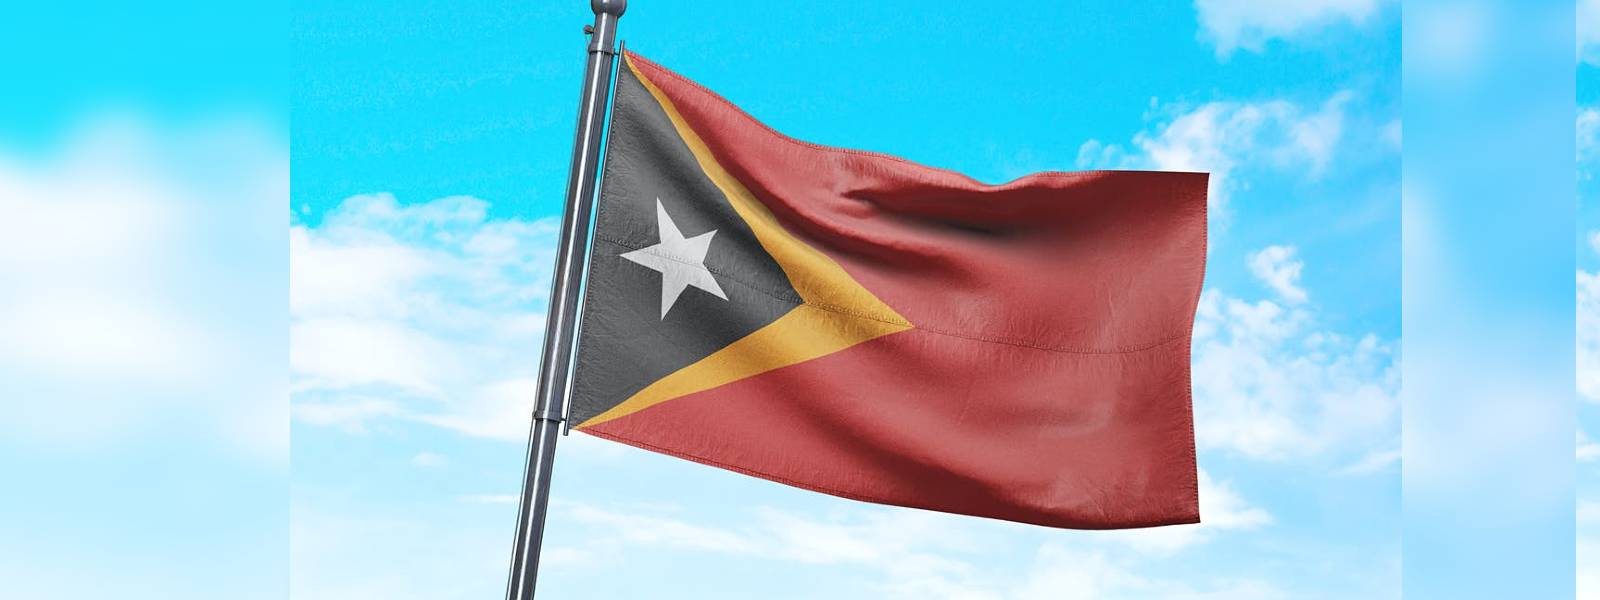 Sri Lanka to establish relations with East Timor